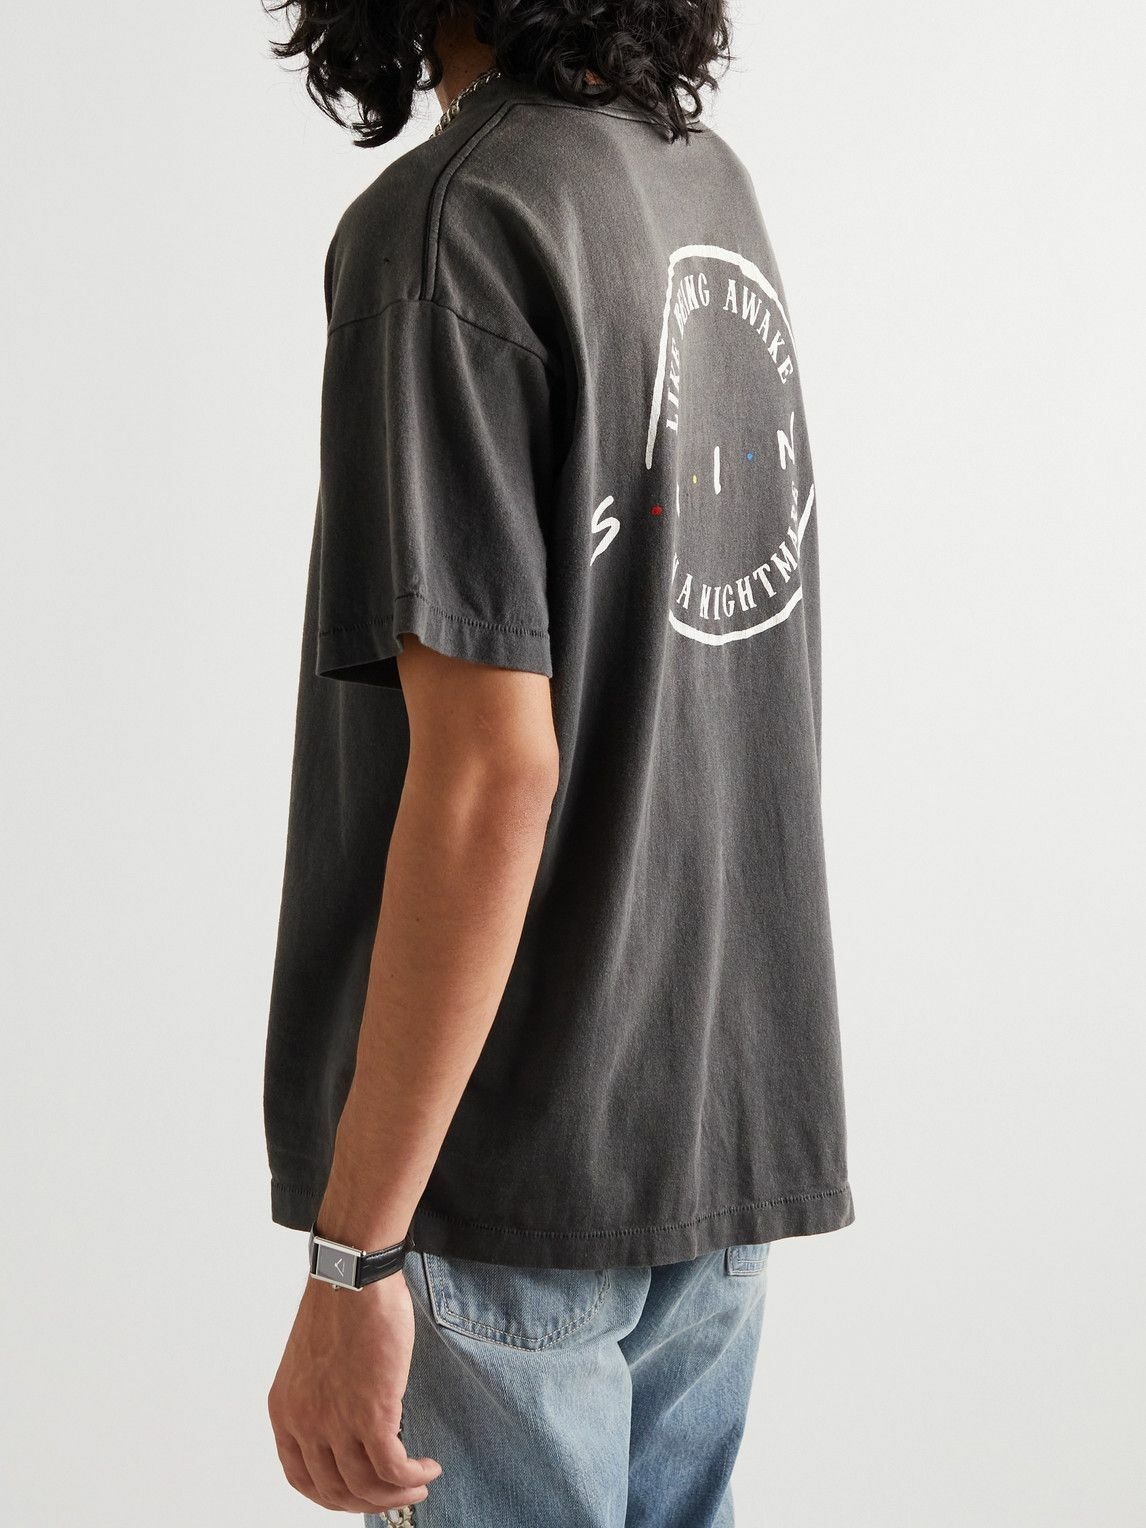 SAINT Mxxxxxx - Logo-Print Distressed Cotton-Jersey T-Shirt - Black